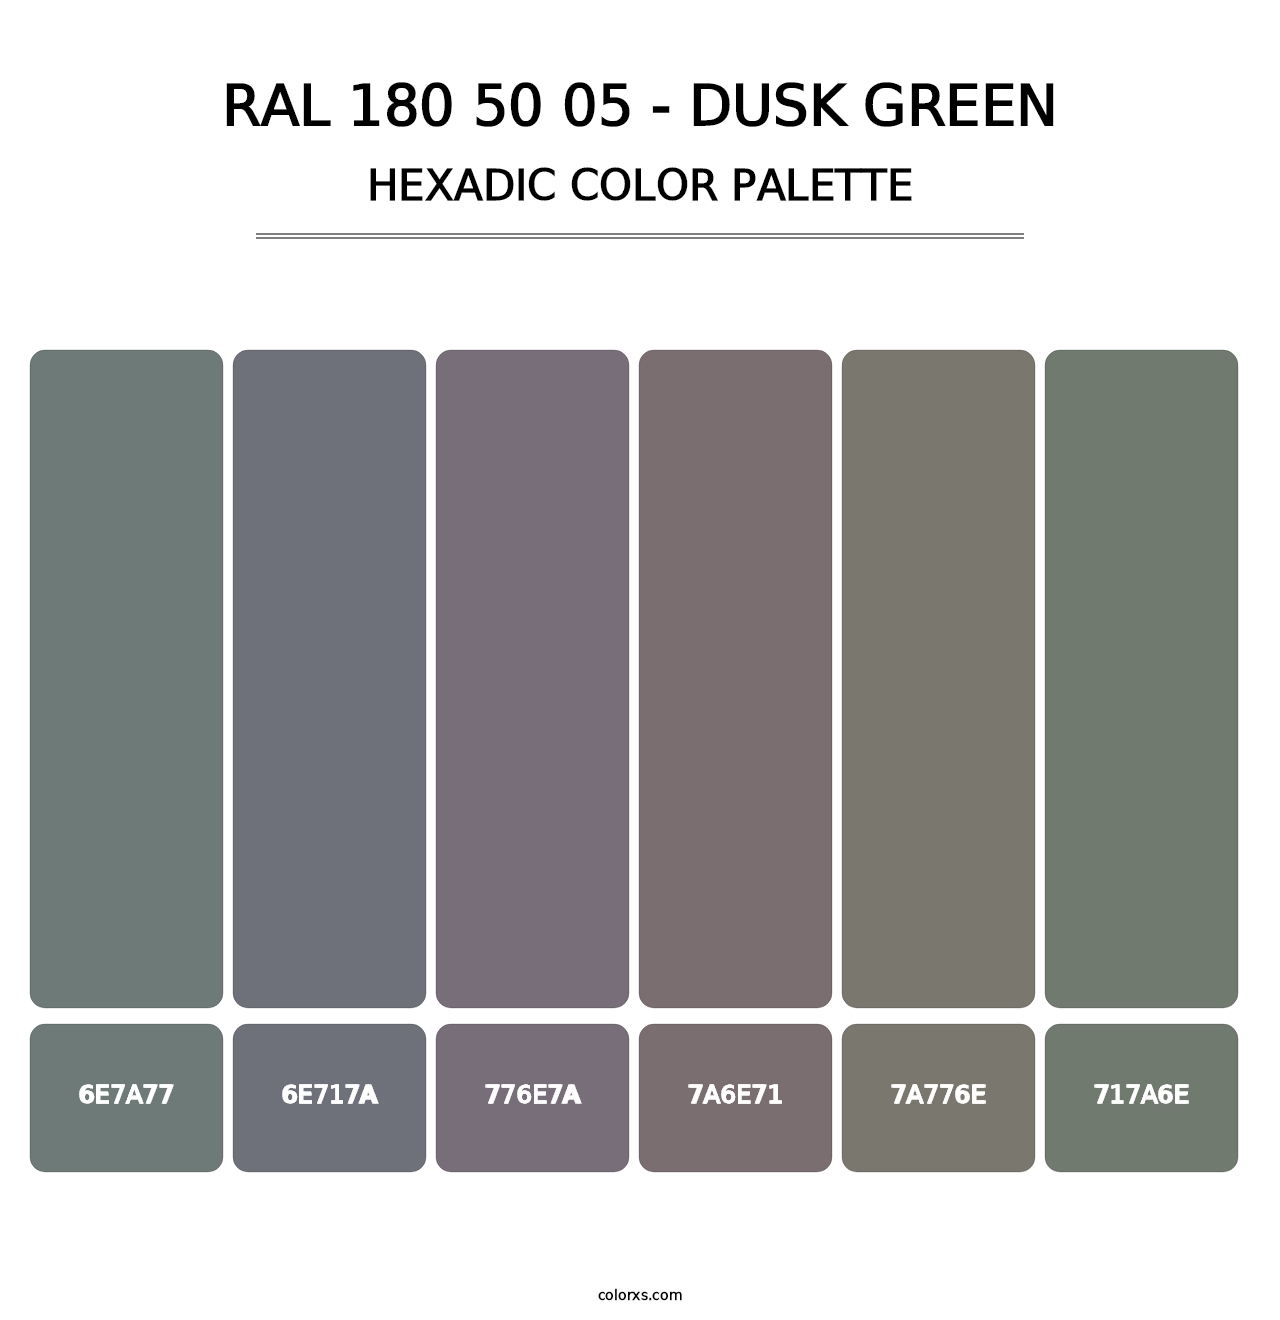 RAL 180 50 05 - Dusk Green - Hexadic Color Palette